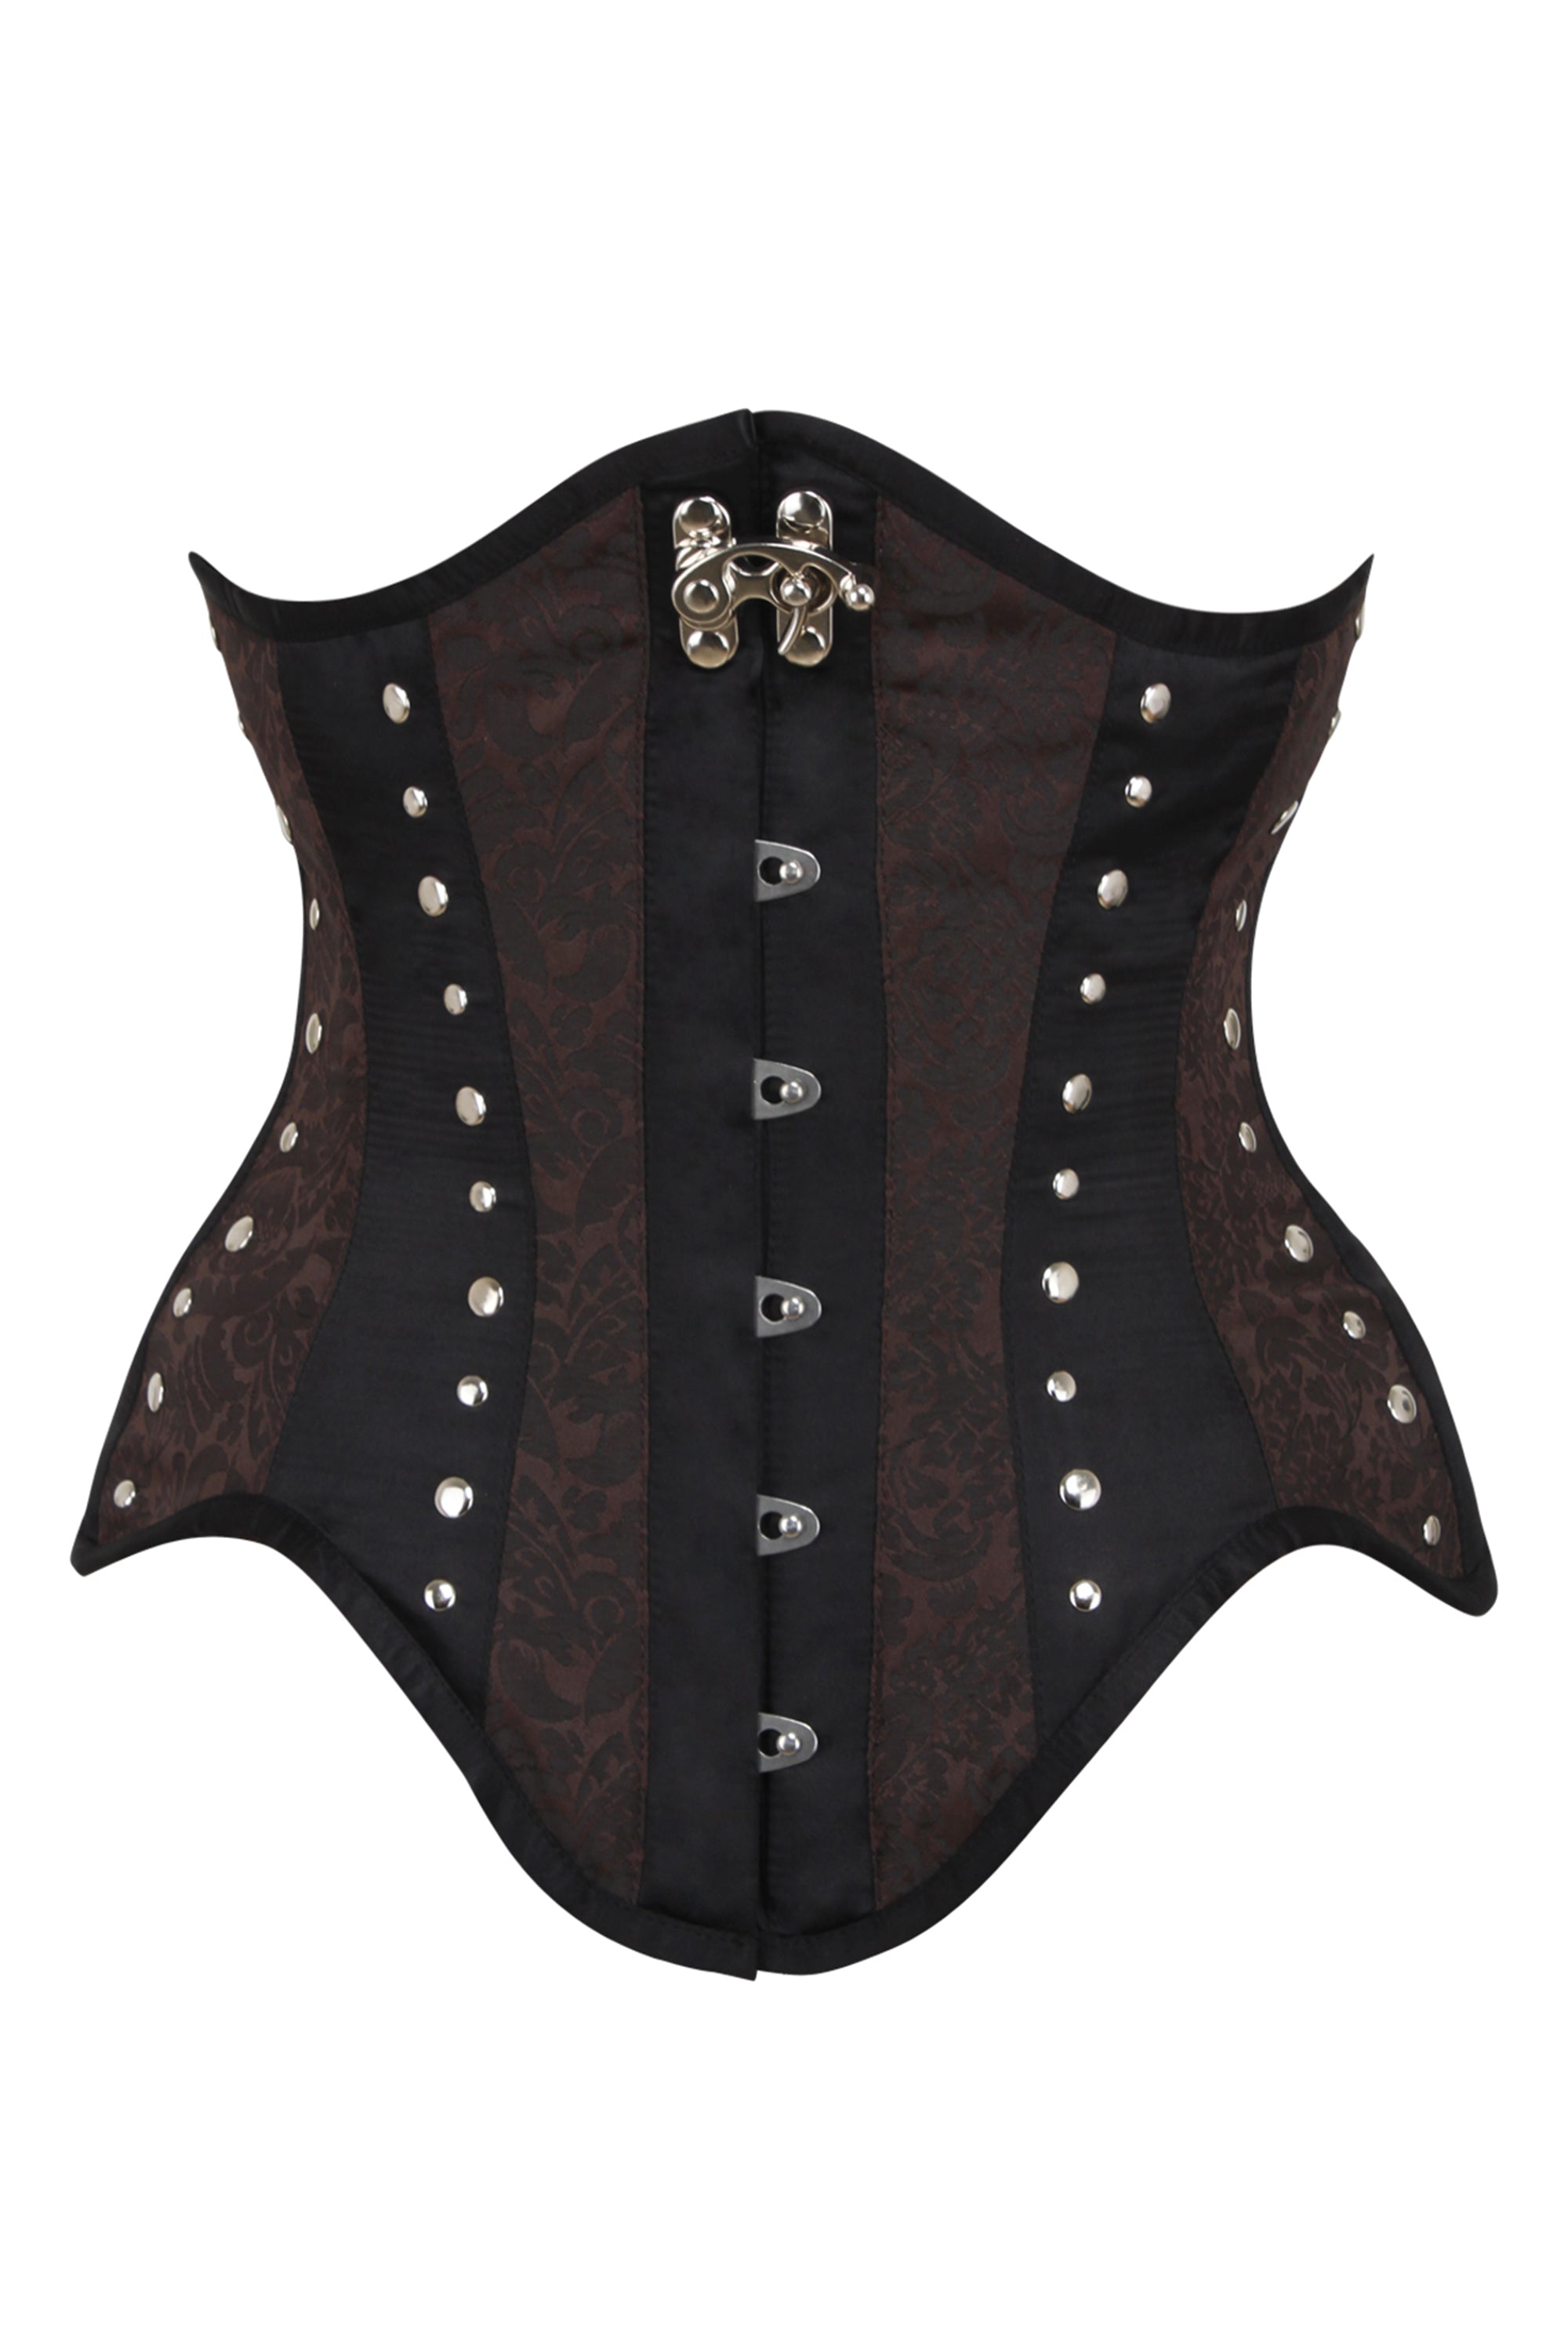 STEEL BONED Soft hook Black Satin cupped corset size 20